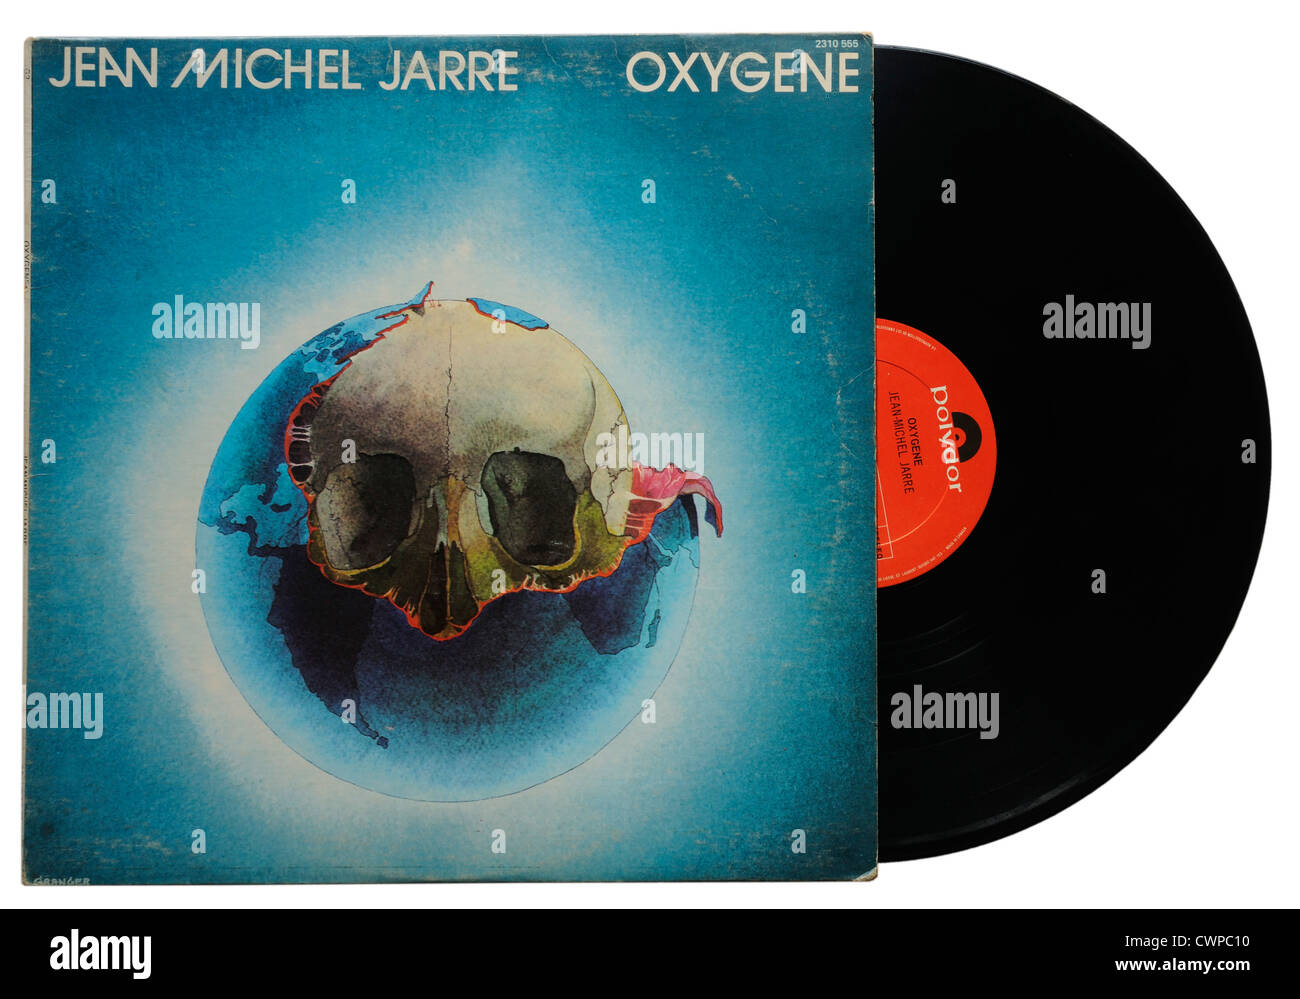 Jean Michel Jarre Oxygene album Photo Stock - Alamy